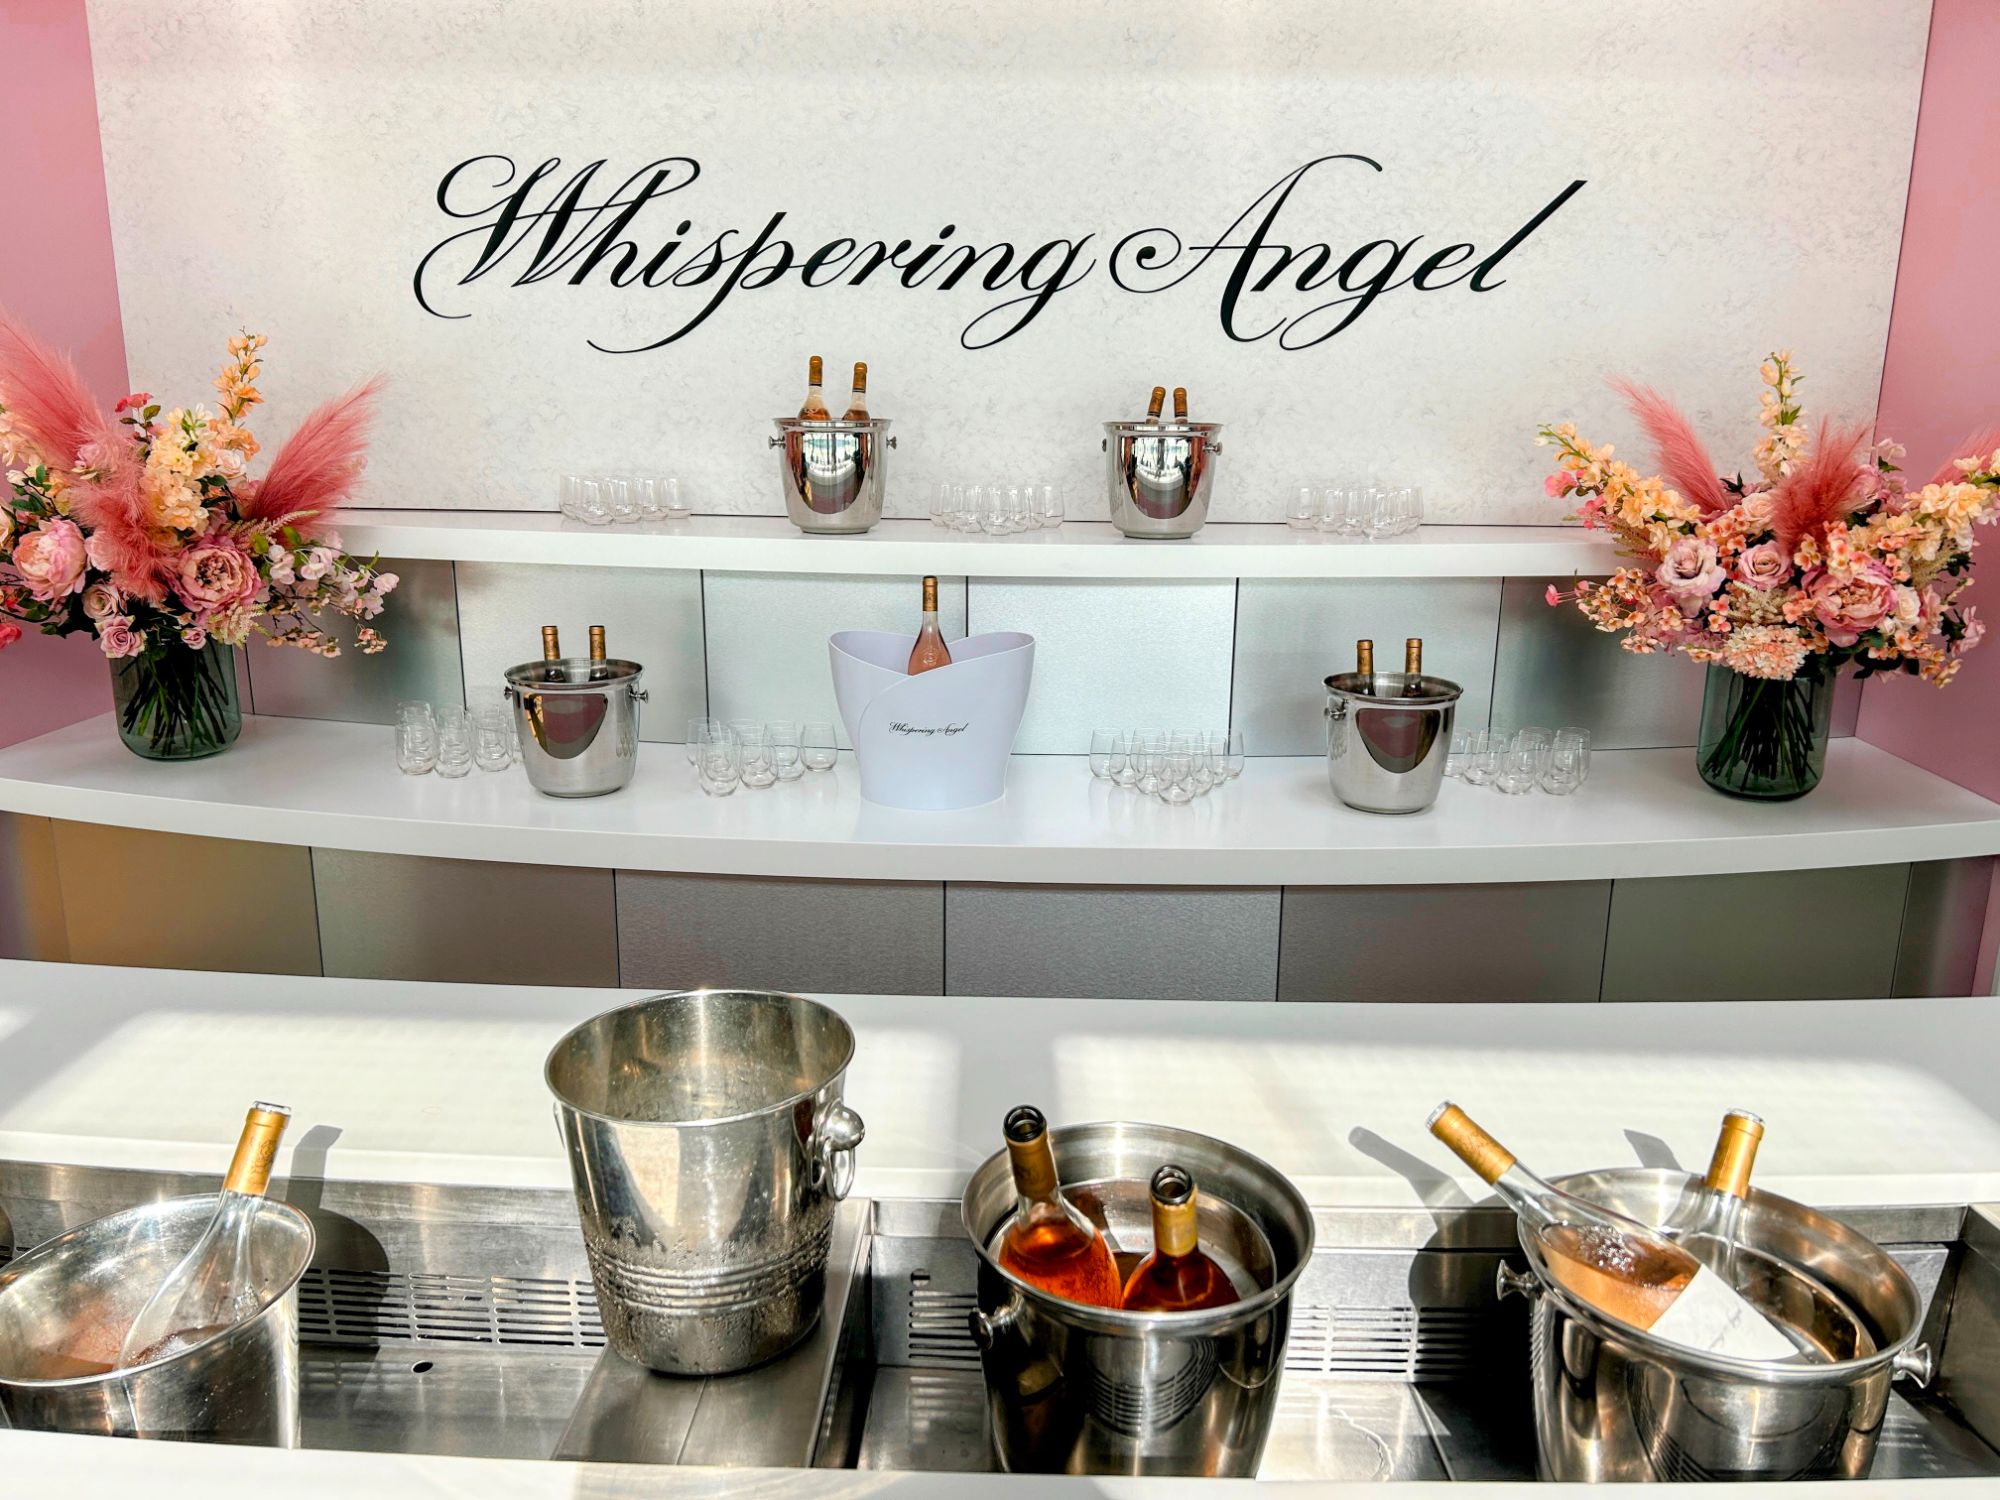 British Airways - Whispering Angel 